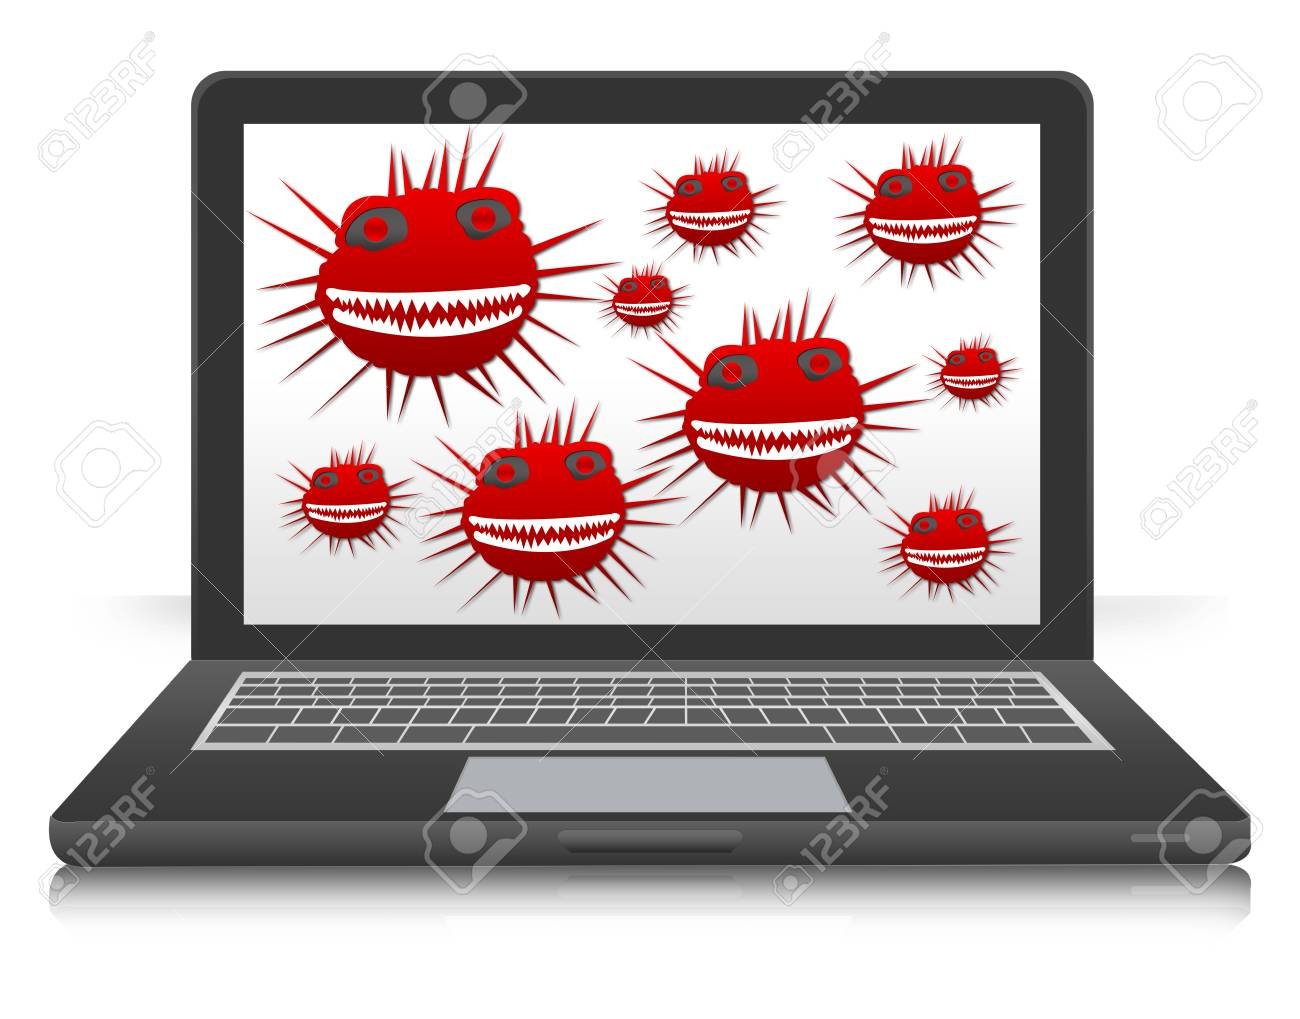 Virus pc. Компьютерные вирусы. Вирус на компьютере. Компьютерные вирусы картинки. Компьютерный вирус иллюстрация.